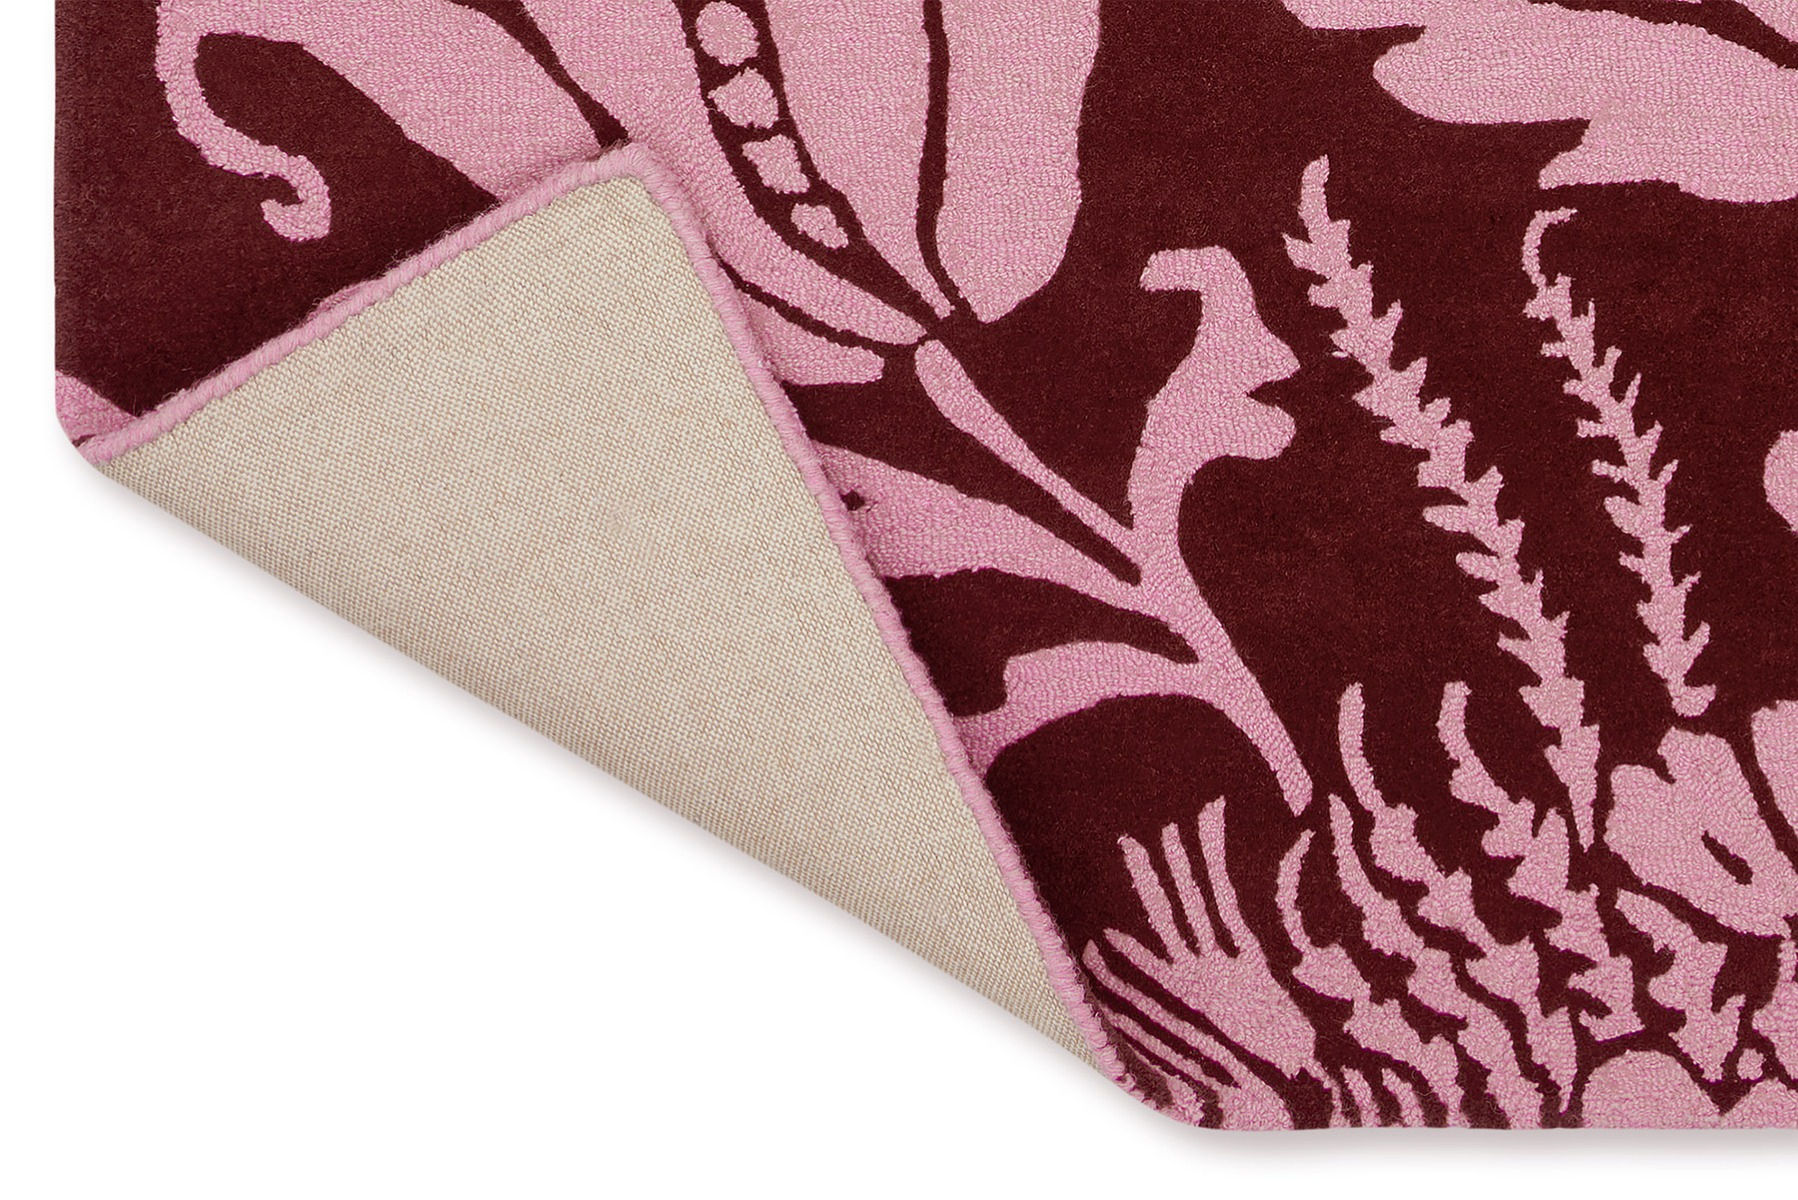 Baroque Pink Rug ☞ Size: 200 x 280 cm